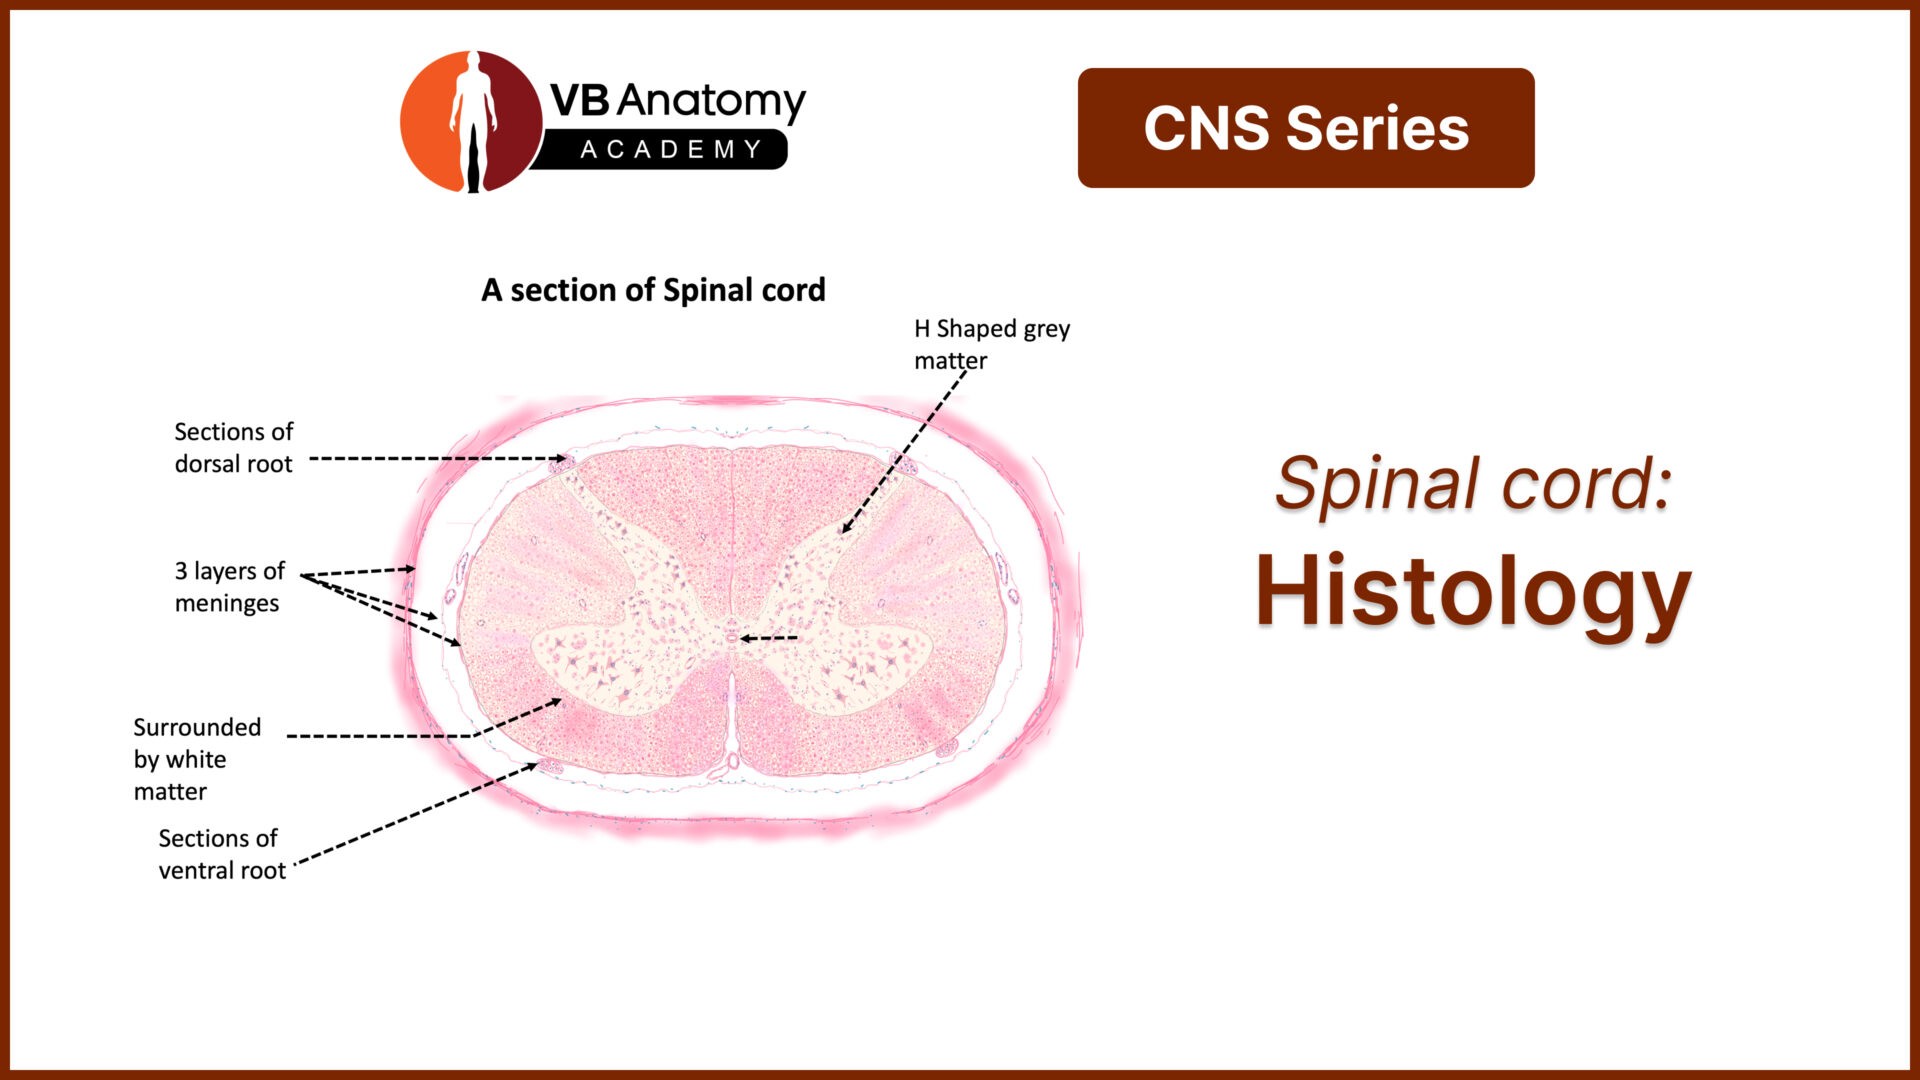 Spinal cord histology